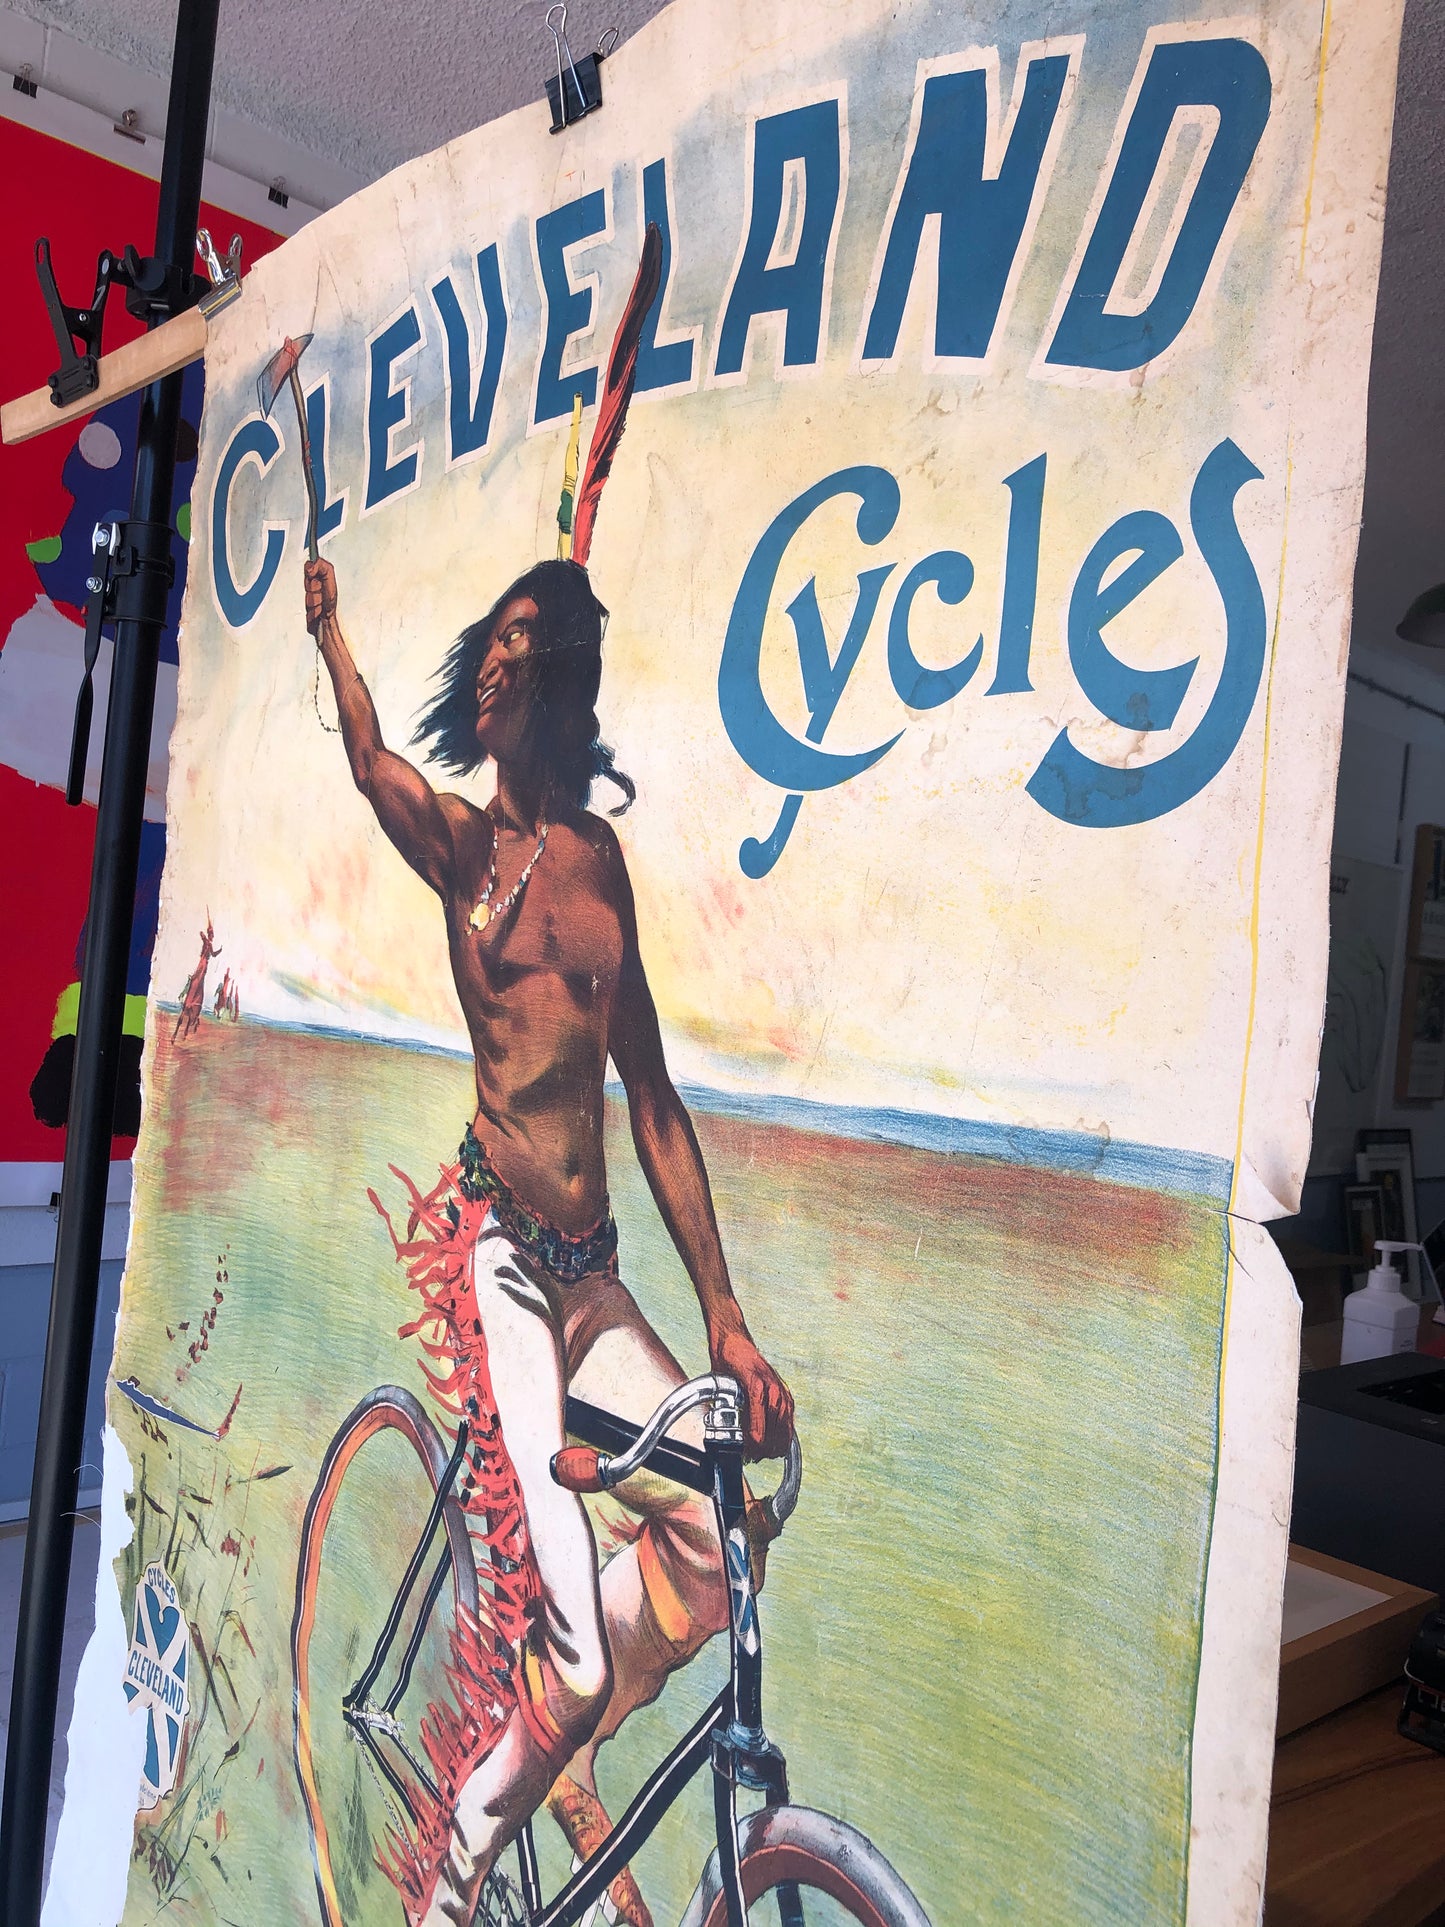 Cleveland Cycles Original Vintage Advertisement c.1890